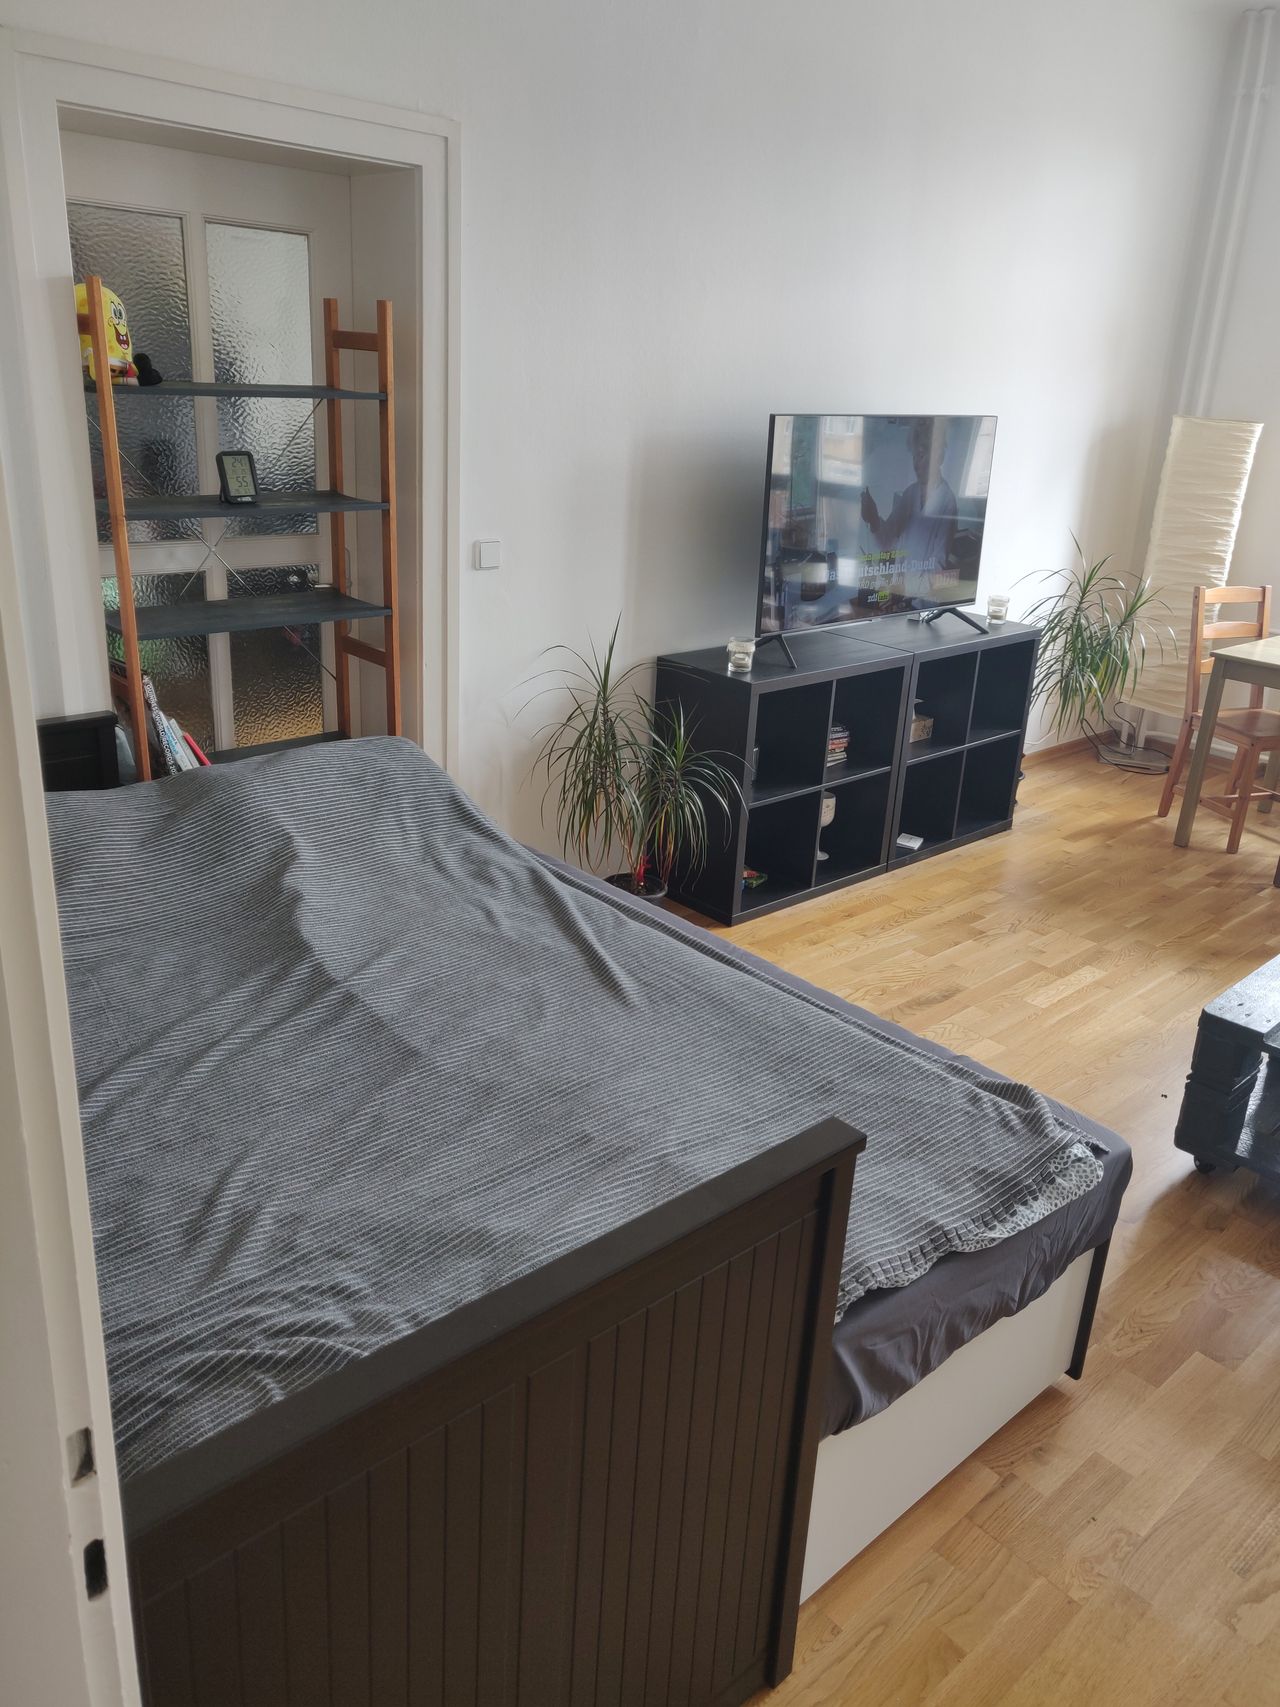 Spacious modern home in Friedrichshain: Bedroom + Livingroom with Daybed and Sleep Sofa + Balcony + Kitchen + Bathroom (Shared Flat)